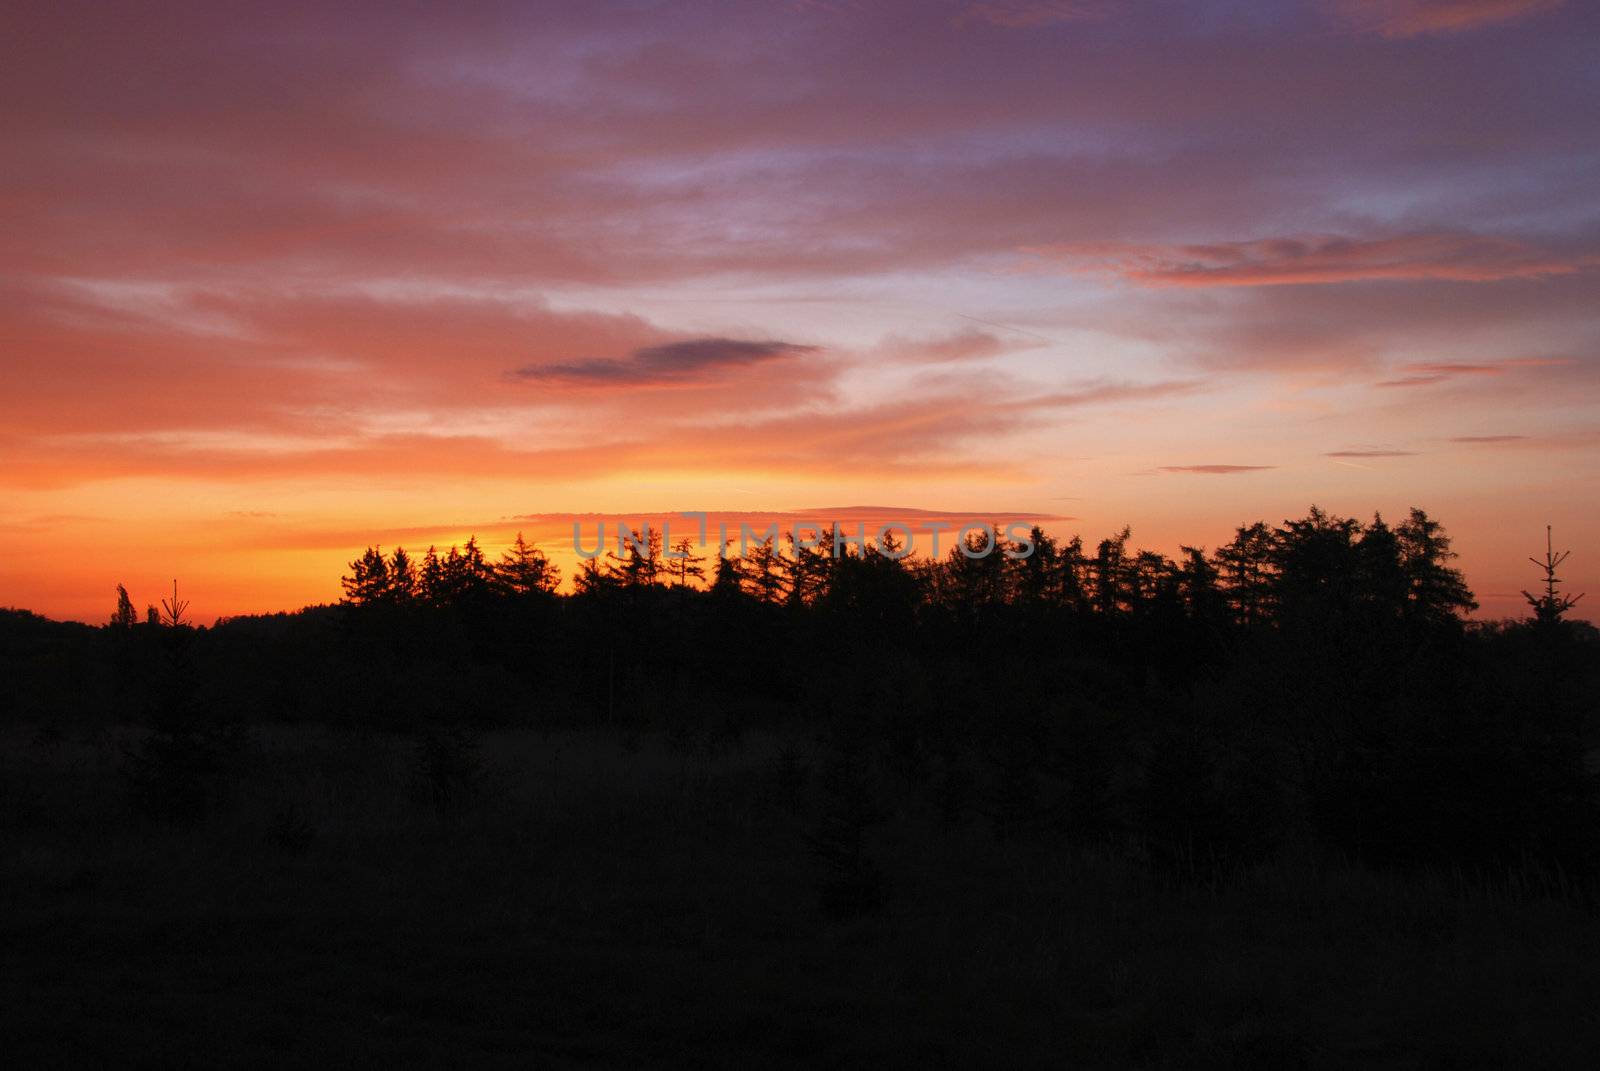 Forest at sunset by drakodav